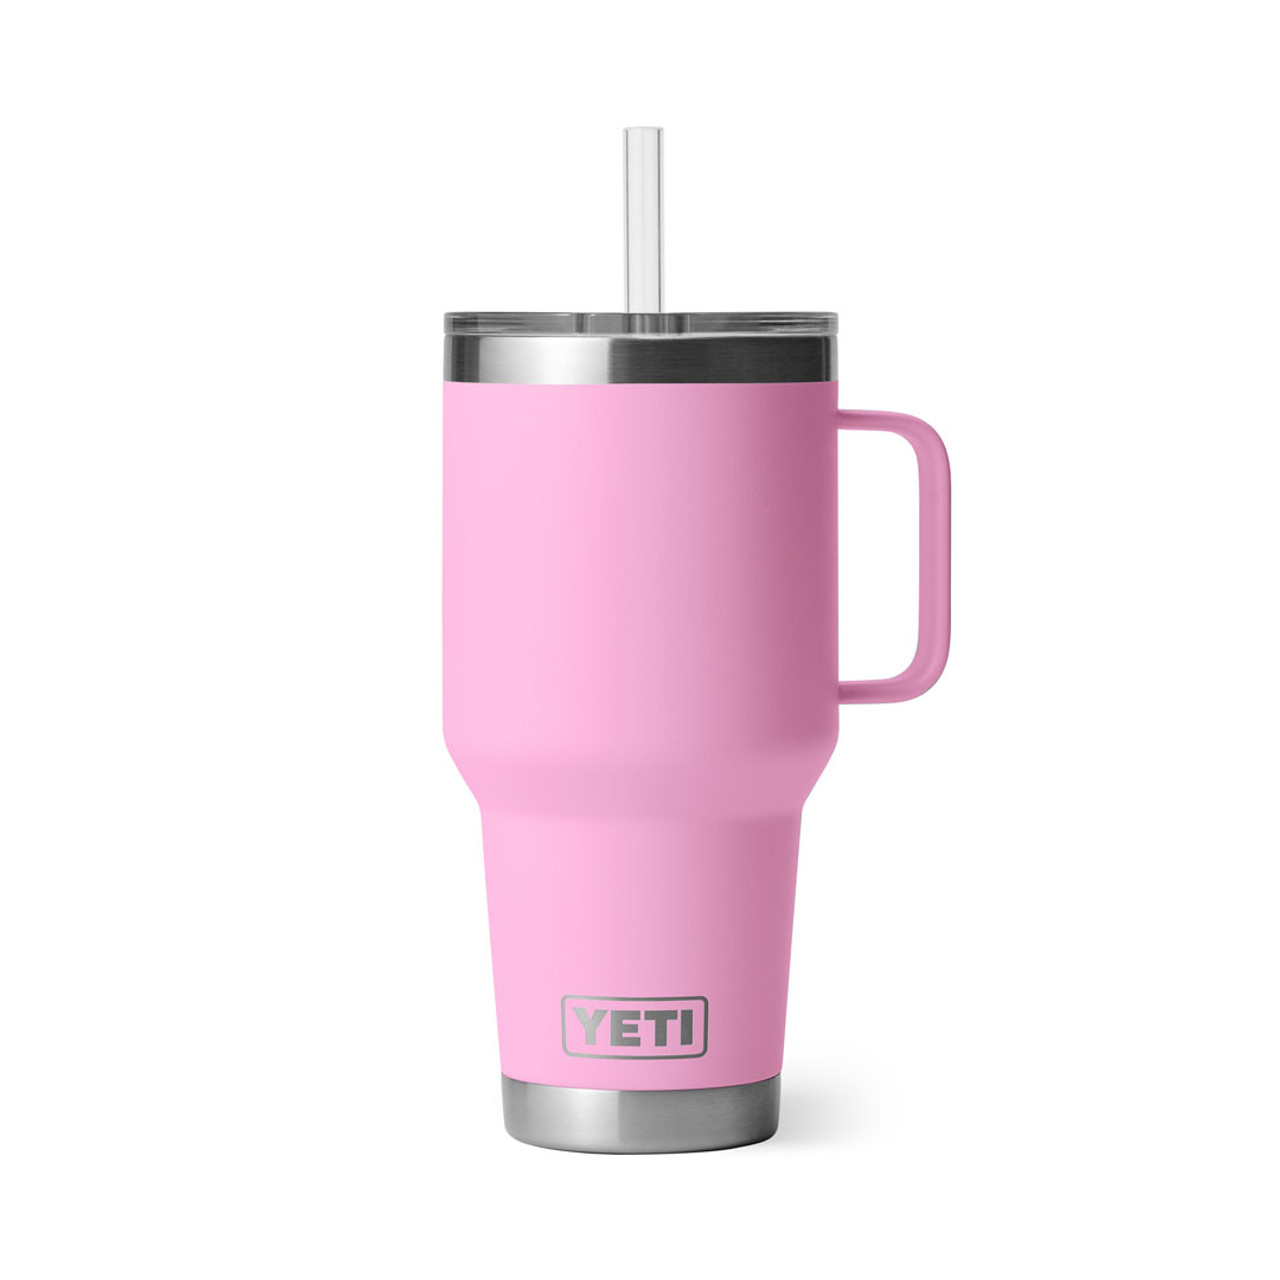 YETI Travel Mug with Handle & Straw Lid Comparison 35oz vs 25oz Rambler 